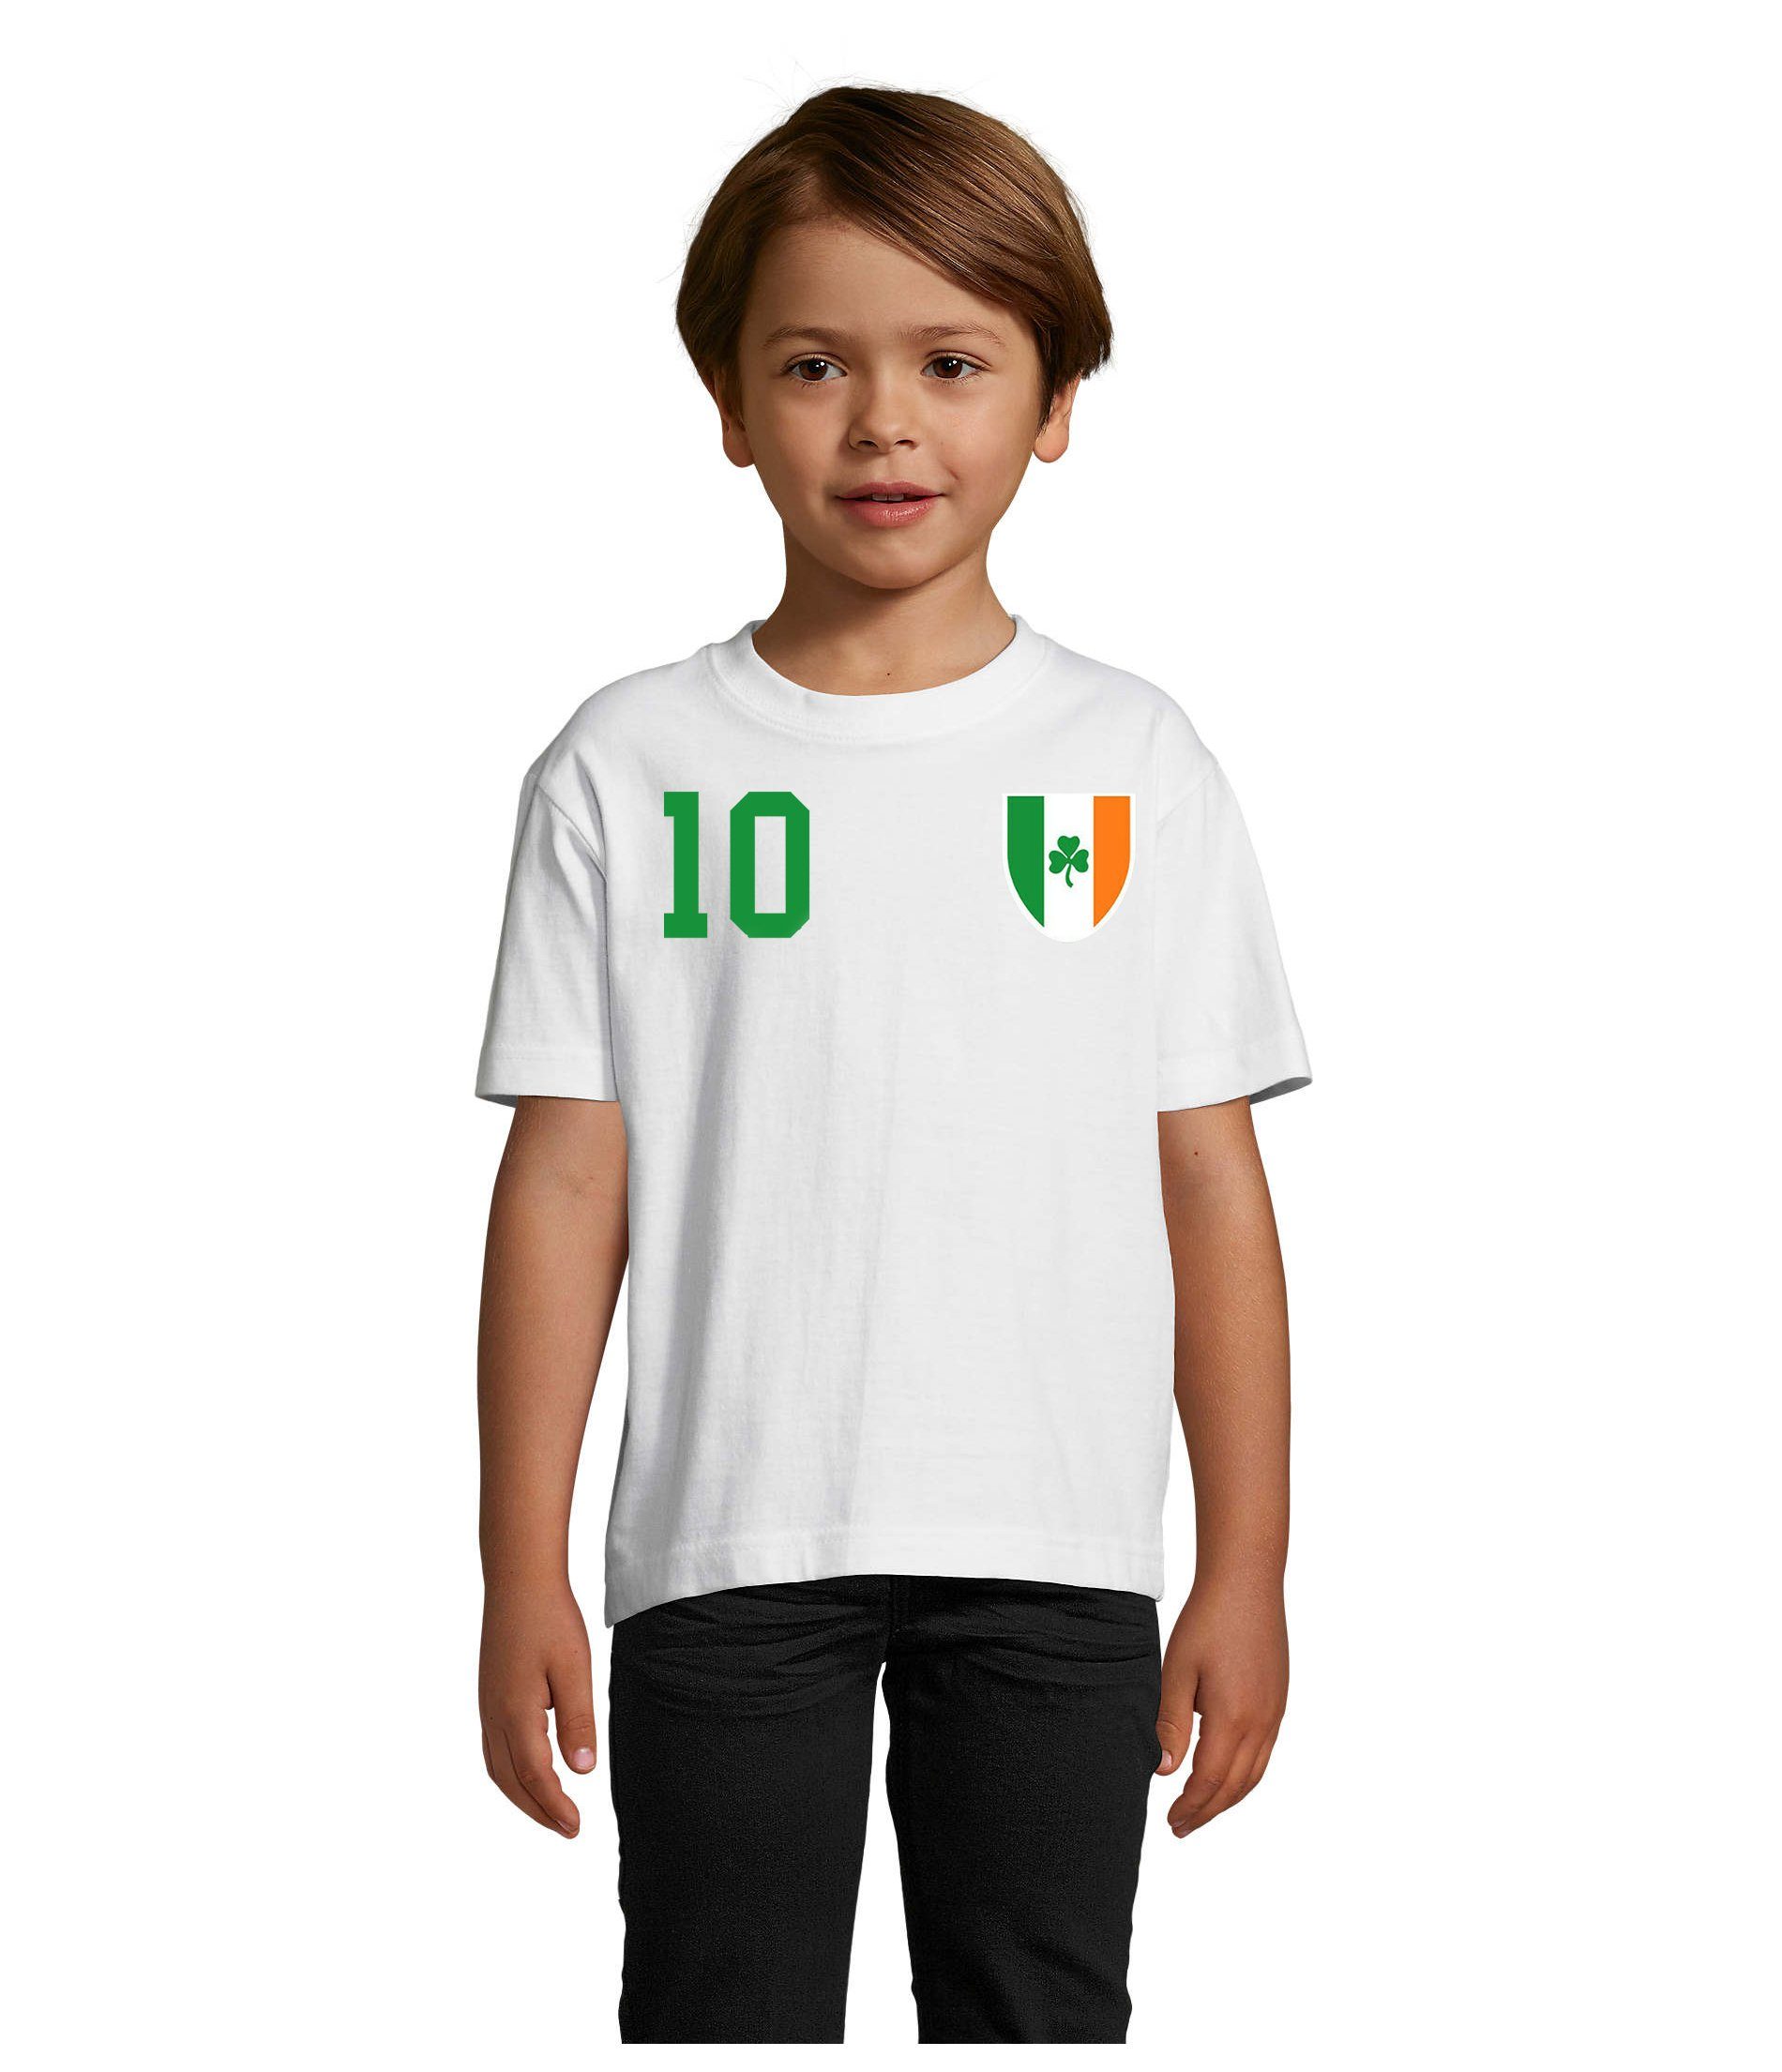 Blondie & Brownie Fußball WM Handball Irland EM Grün/Weiss Sport T-Shirt Trikot Kinder Weltmeister